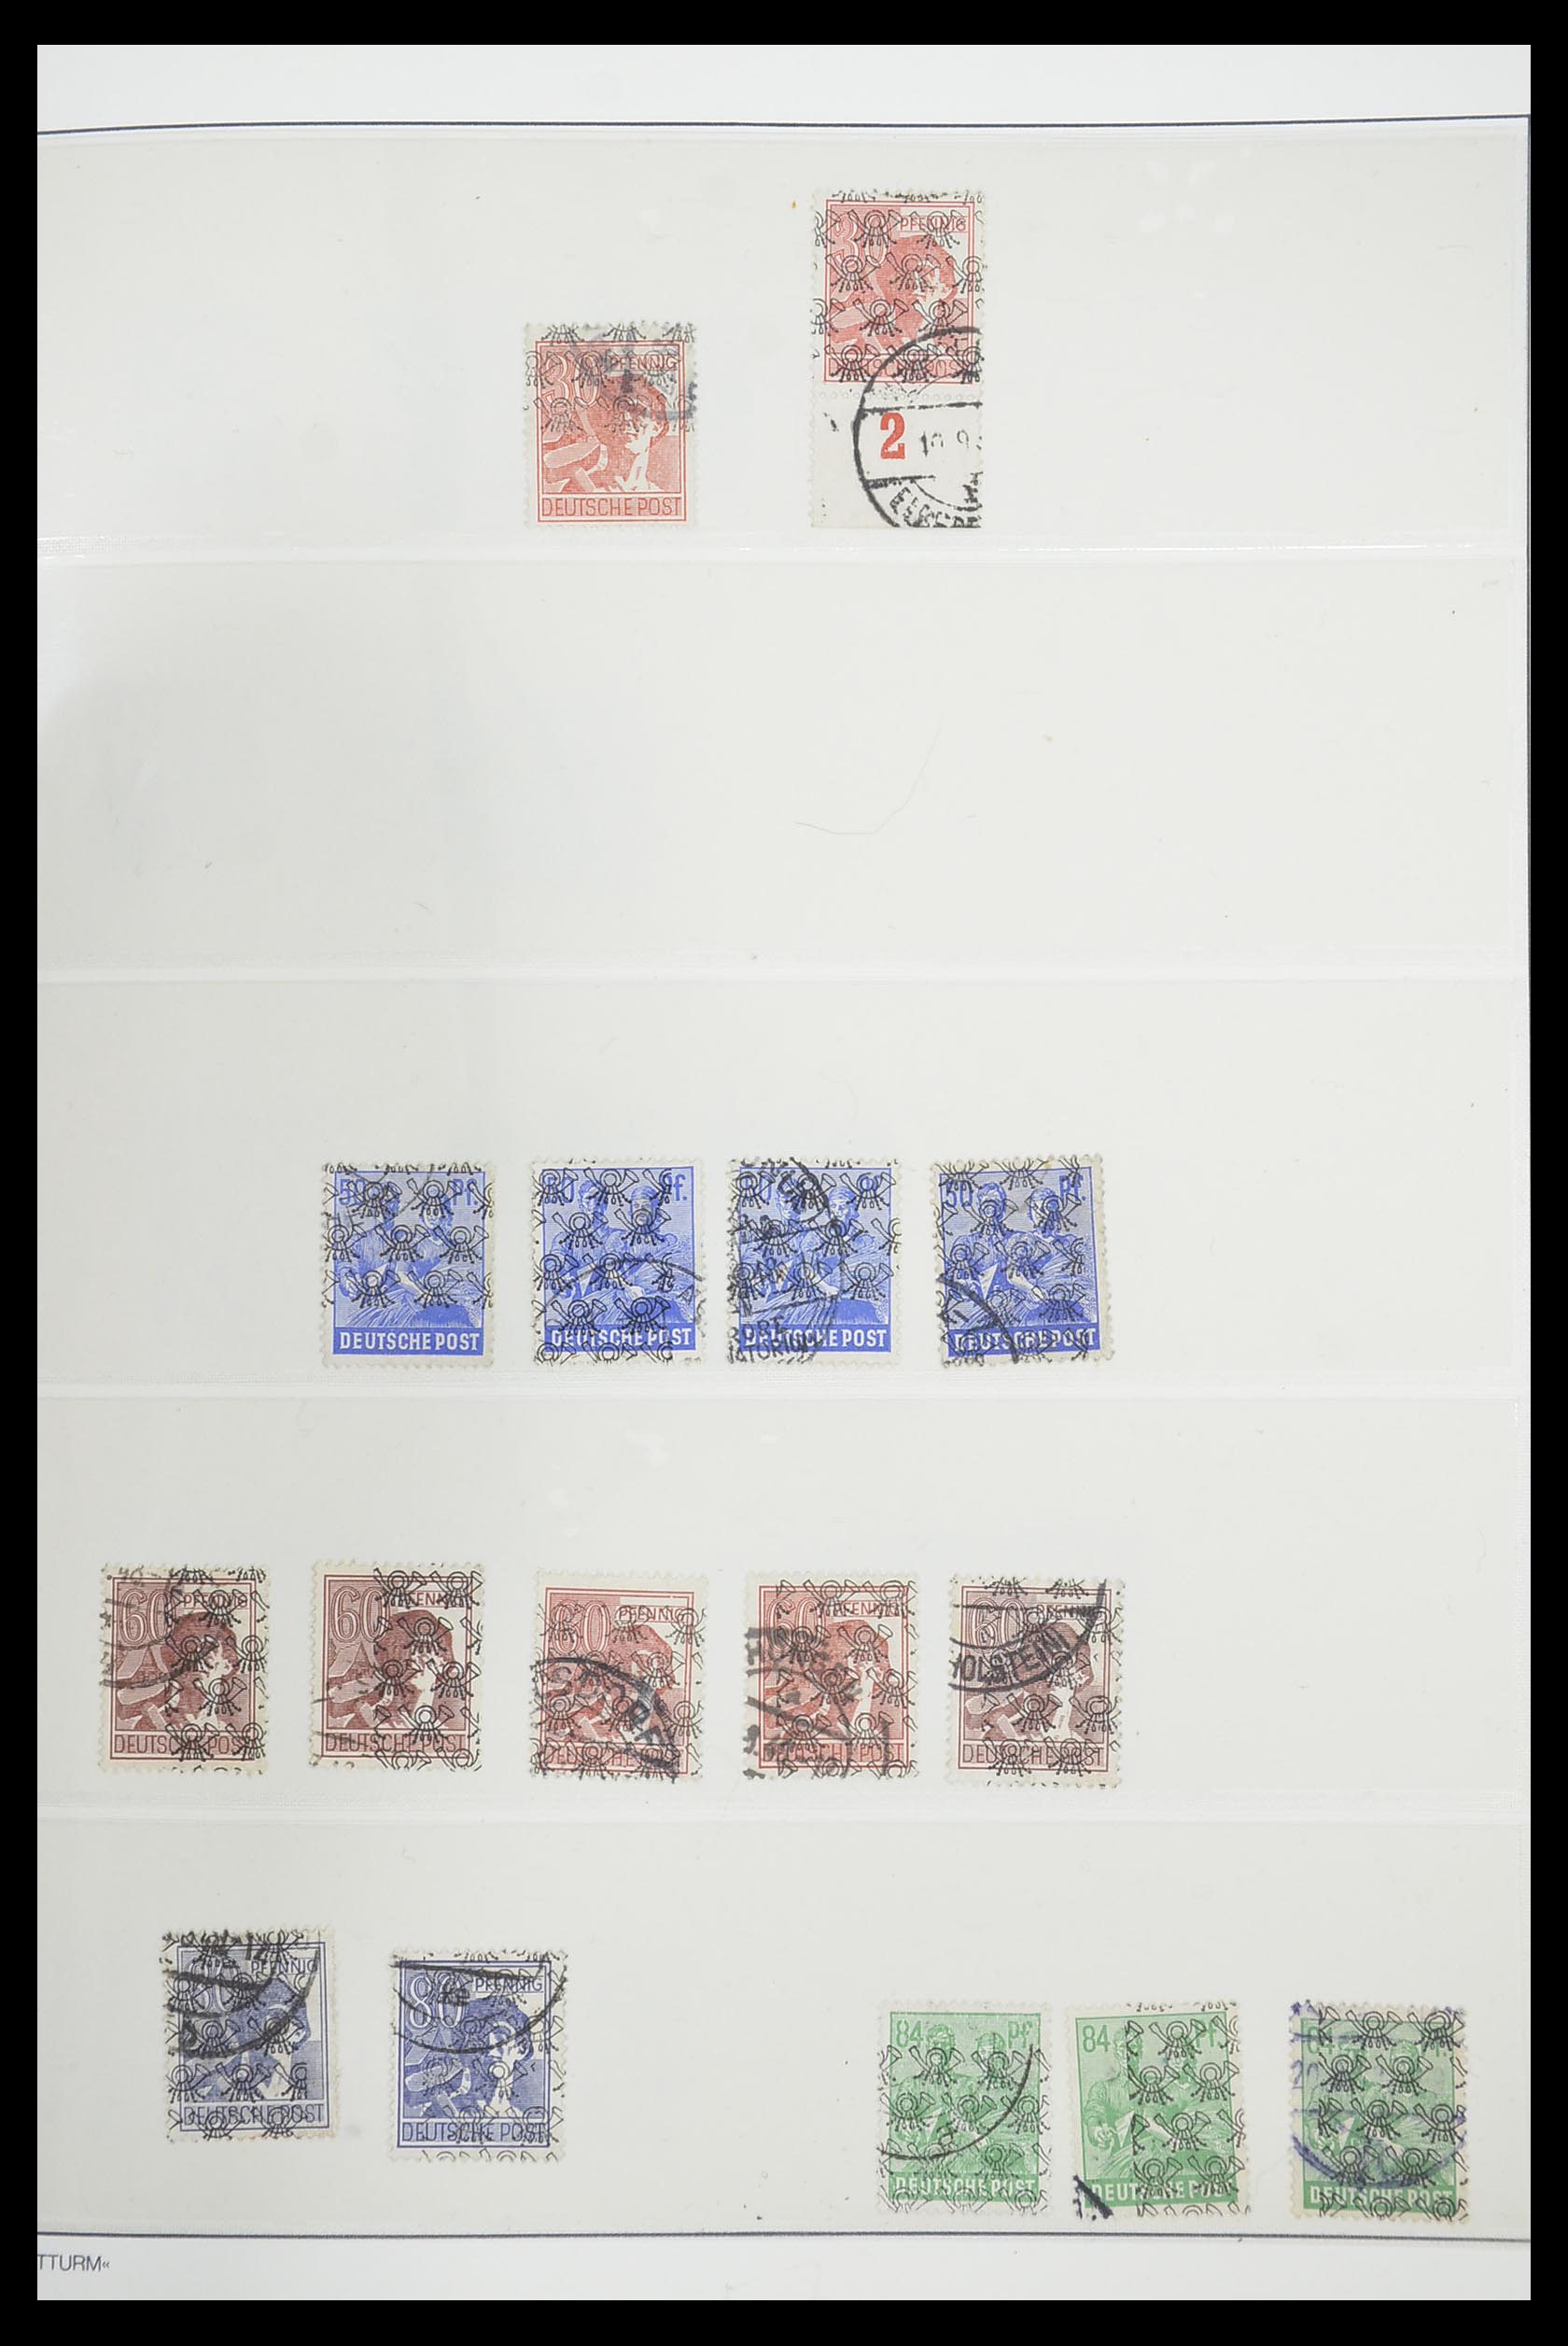 33837 061 - Stamp collection 33837 German Zones 1945-1948.